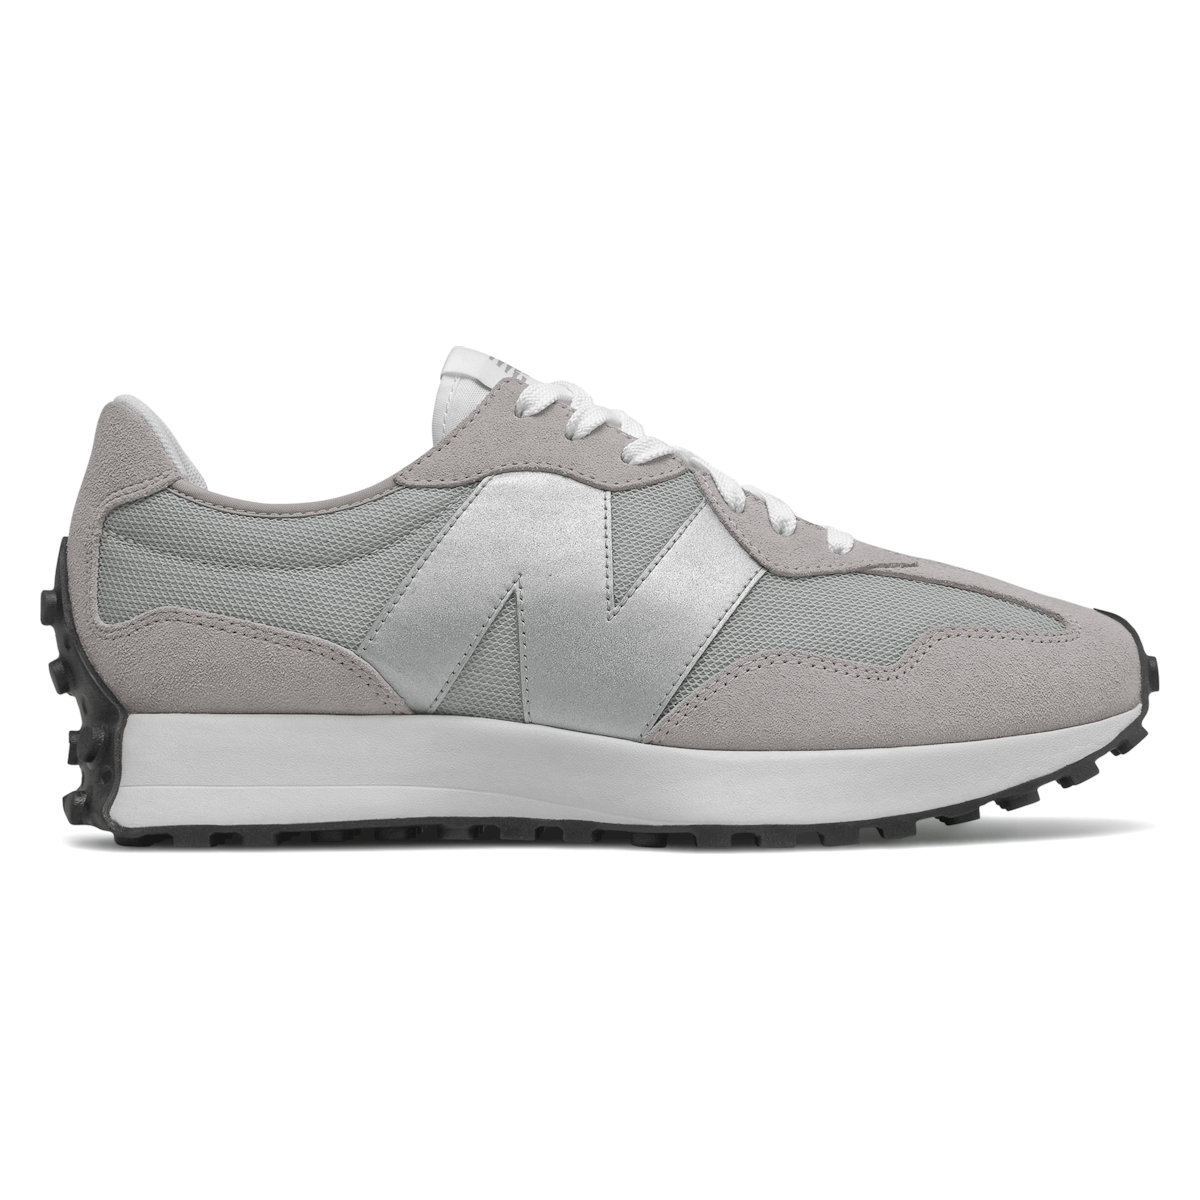 New Balance 327 Grey Silver